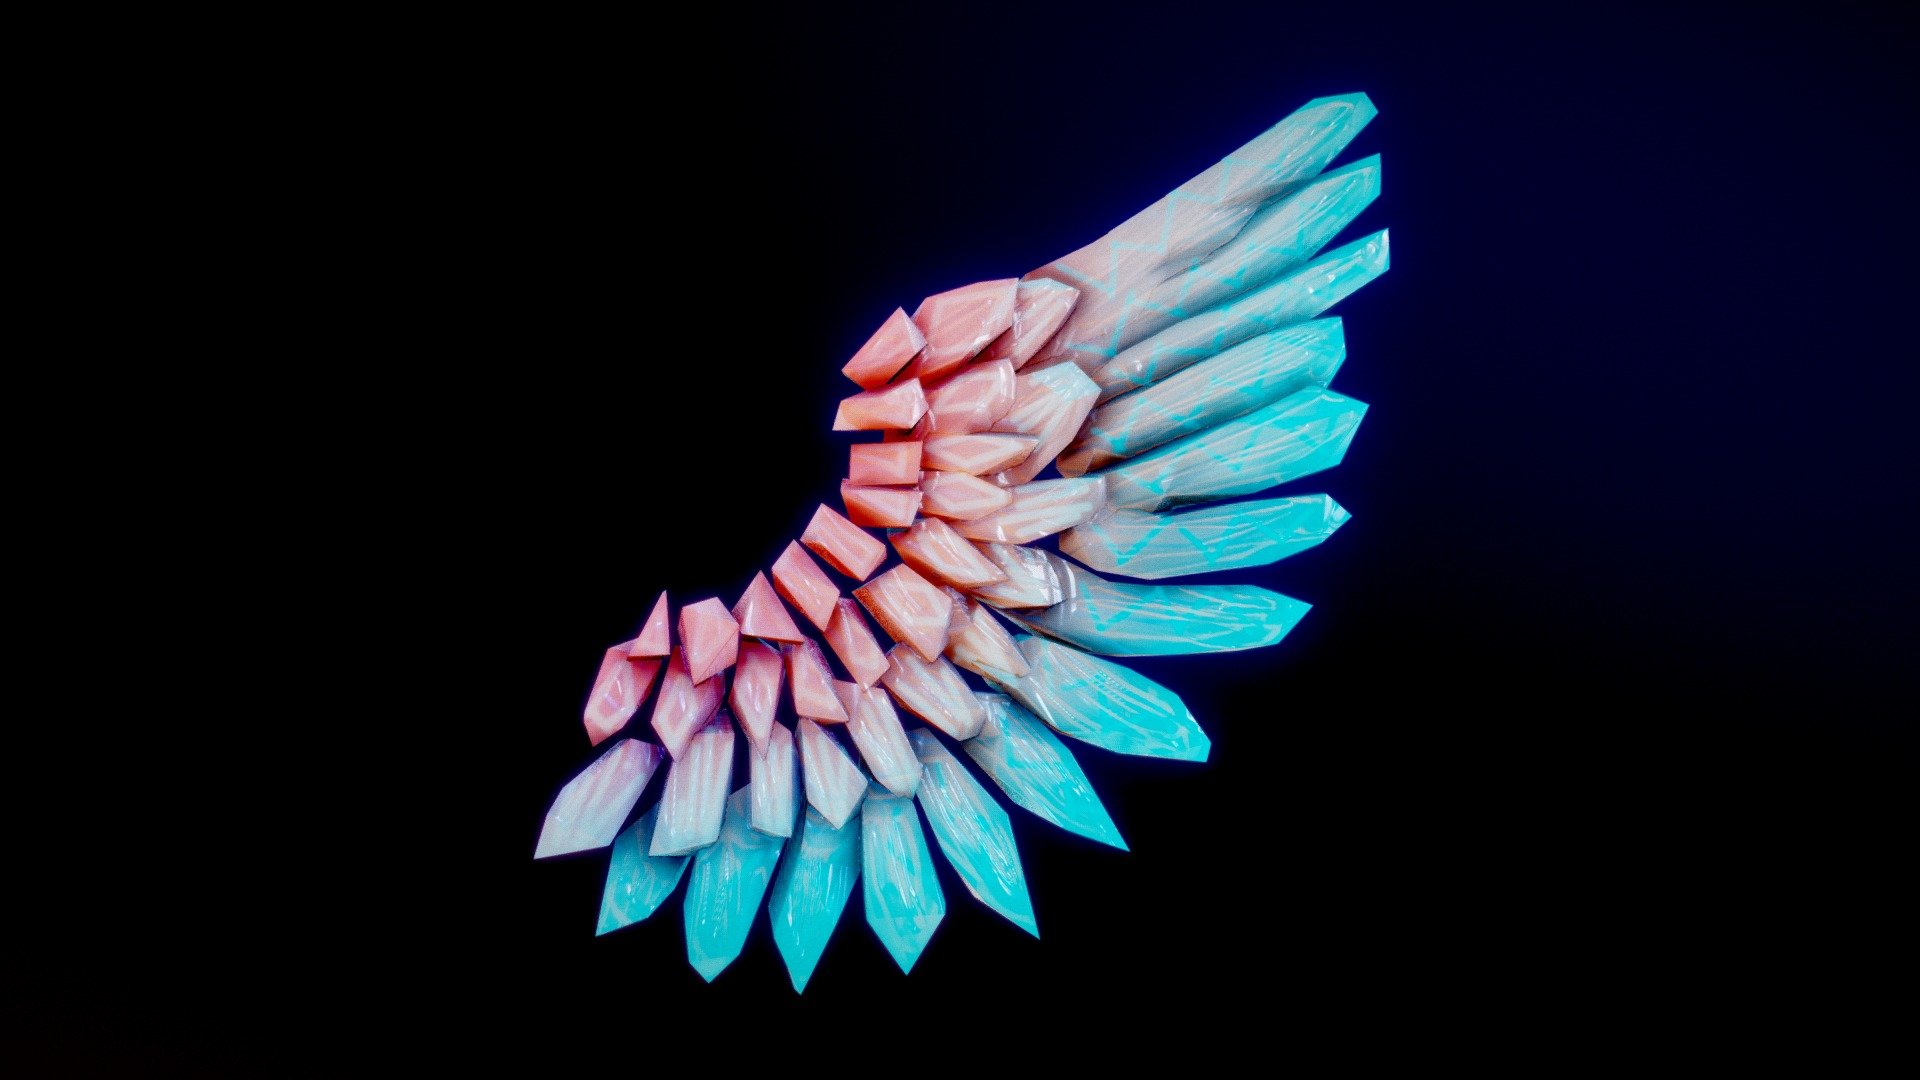 wings 3d review